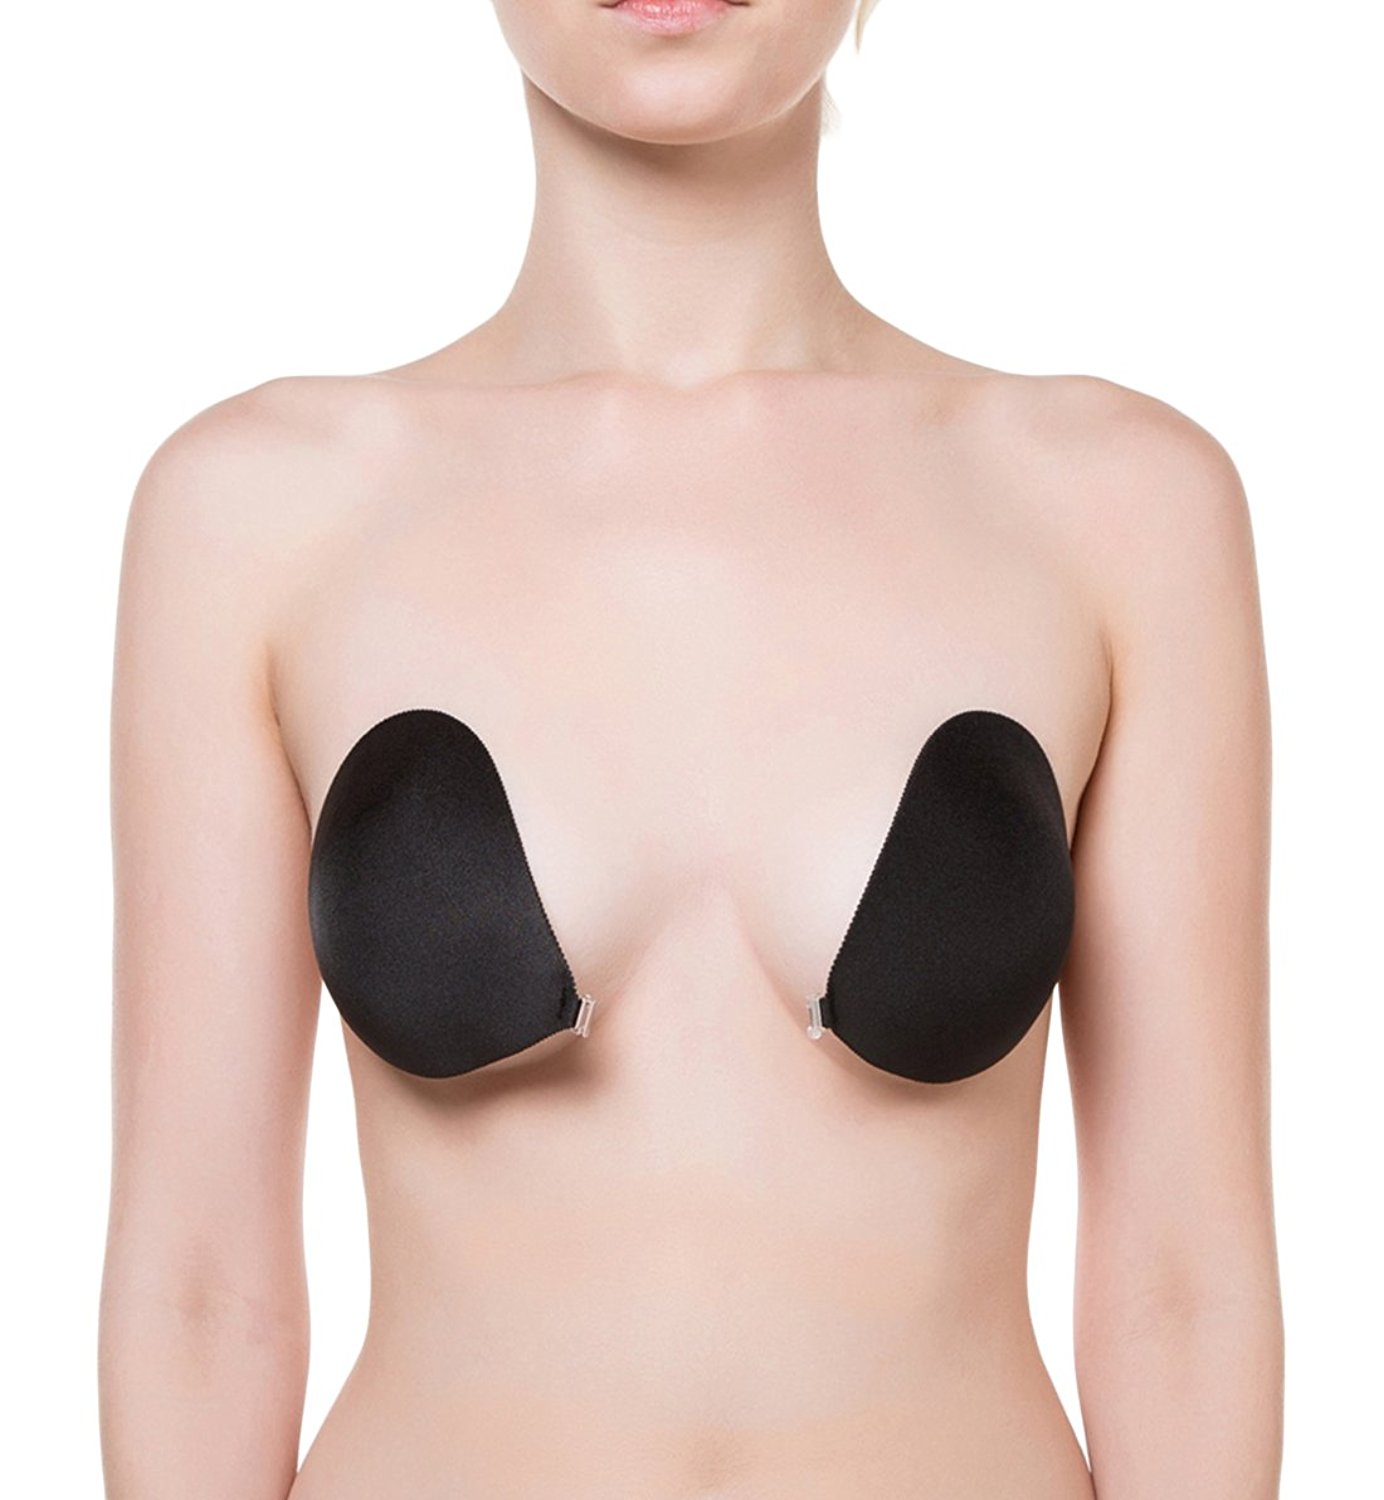 sticky bra nubra seamless push up adhesive bra with molded pads se998 at amazon xkrkmqb